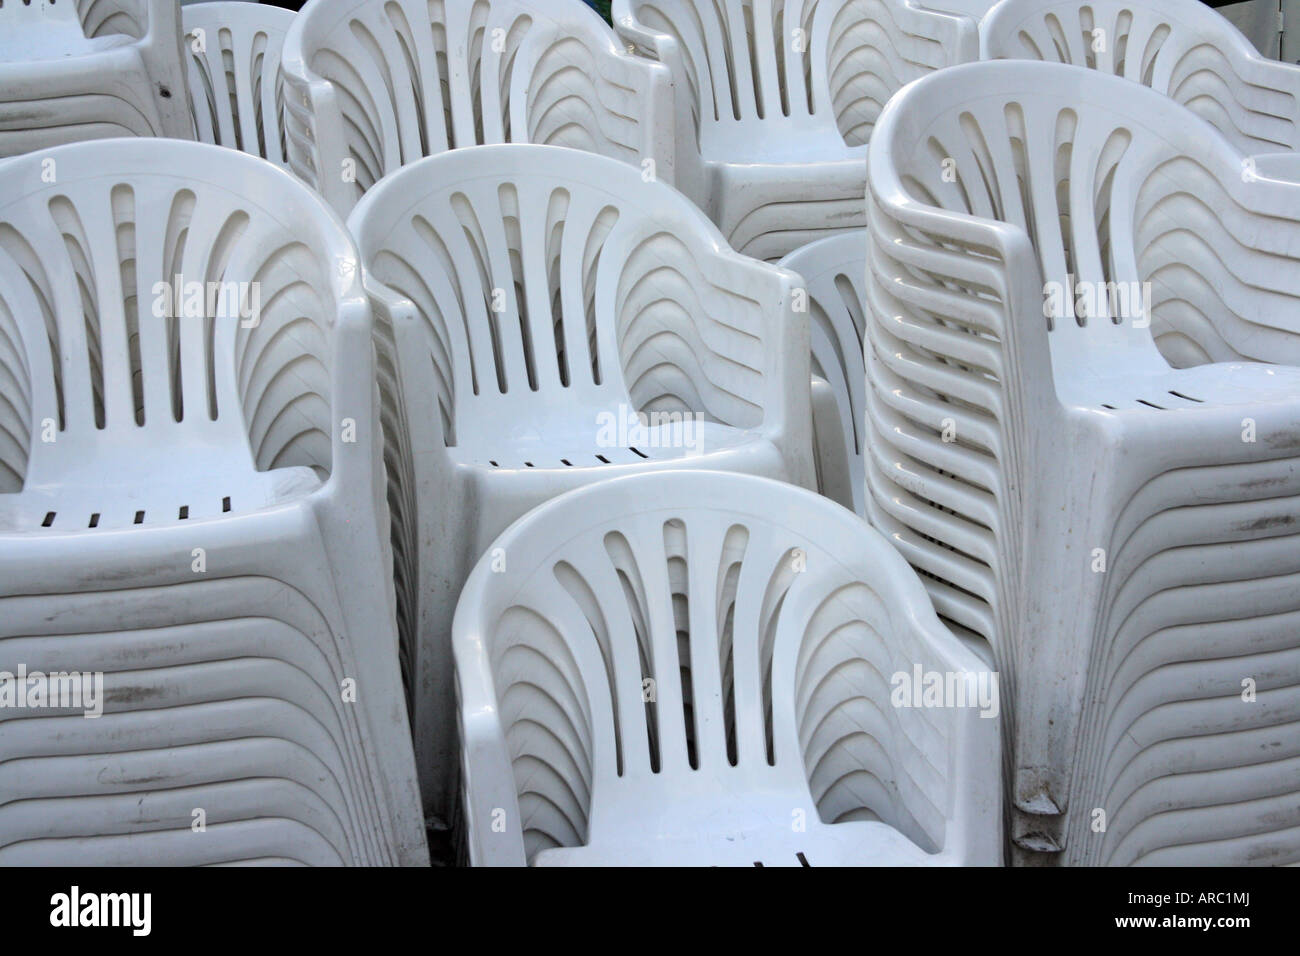 white plastic stacking chairs stock photo  alamy